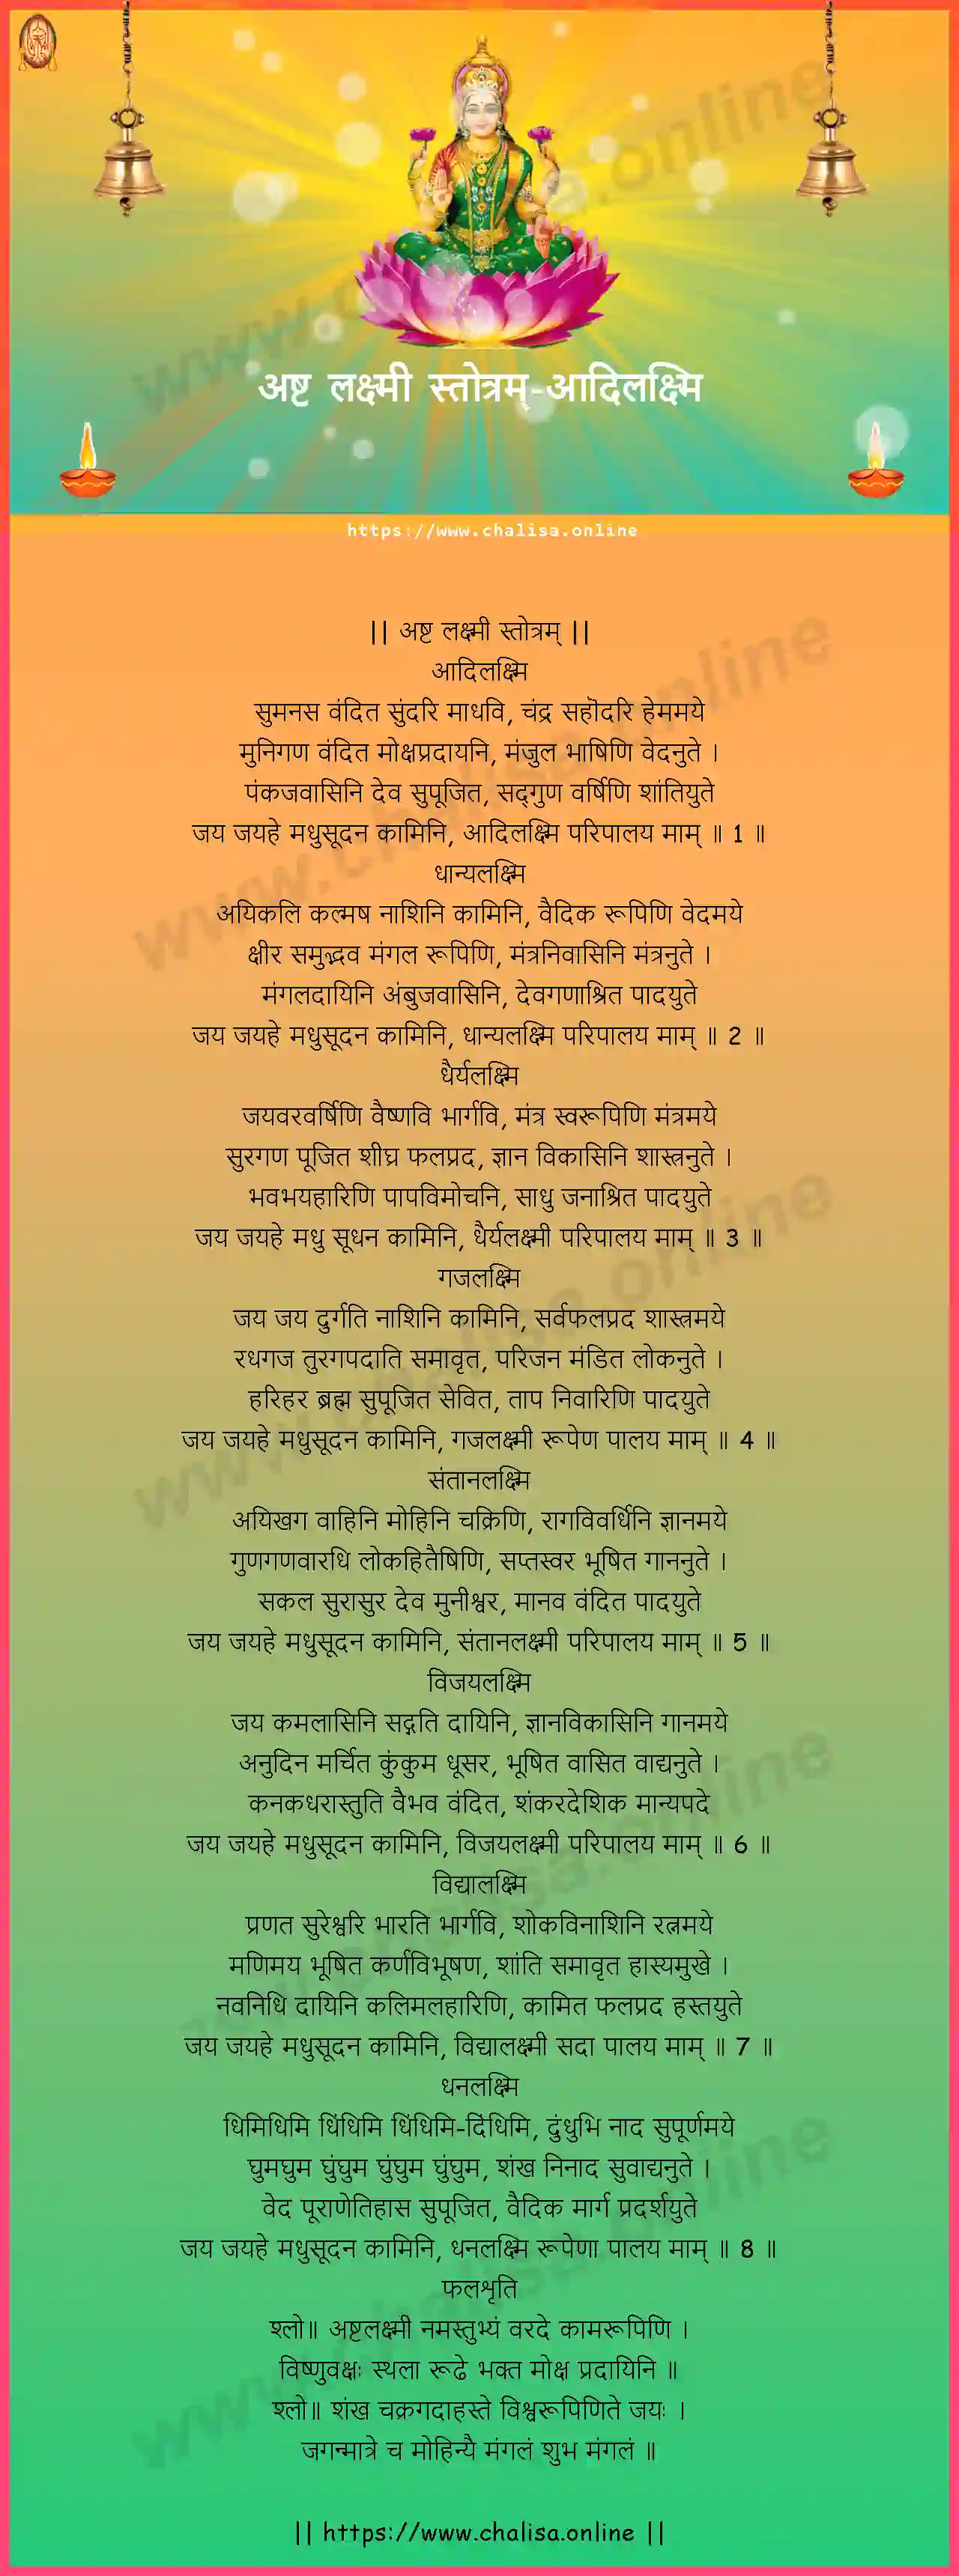 adilaksmi-ashta-lakshmi-stotram-marathi-marathi-lyrics-download